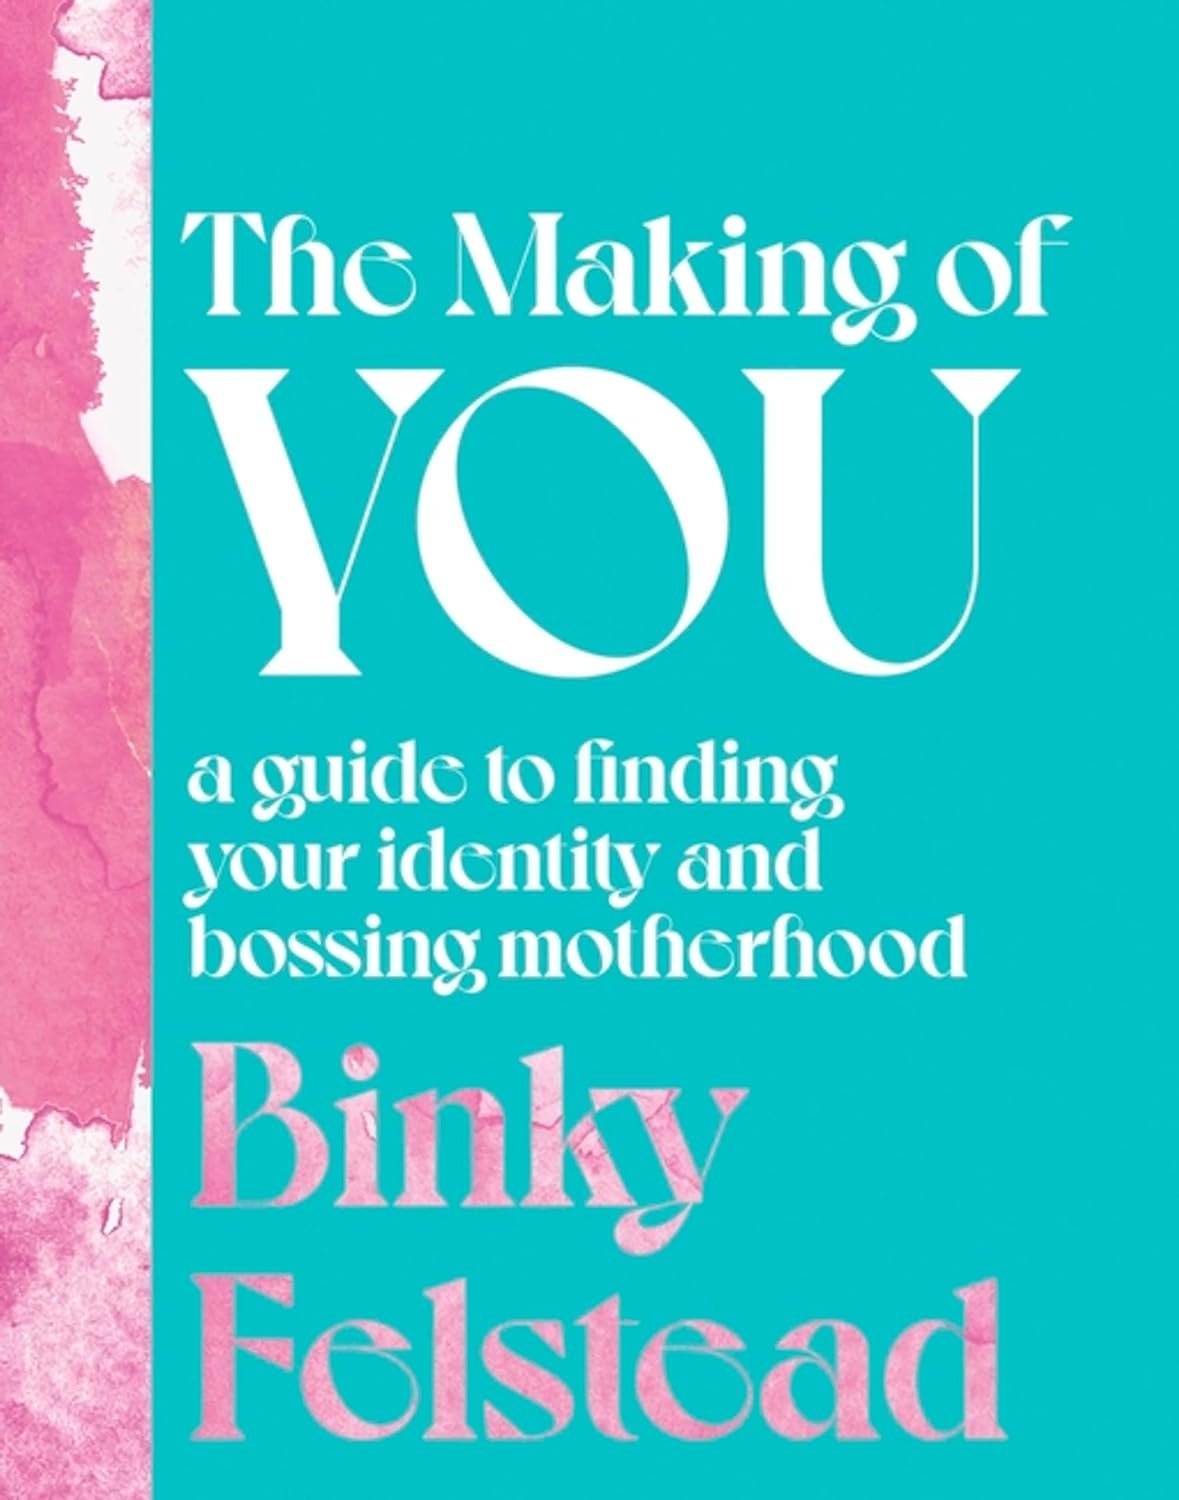 the making of you book by binky felstead.jpg